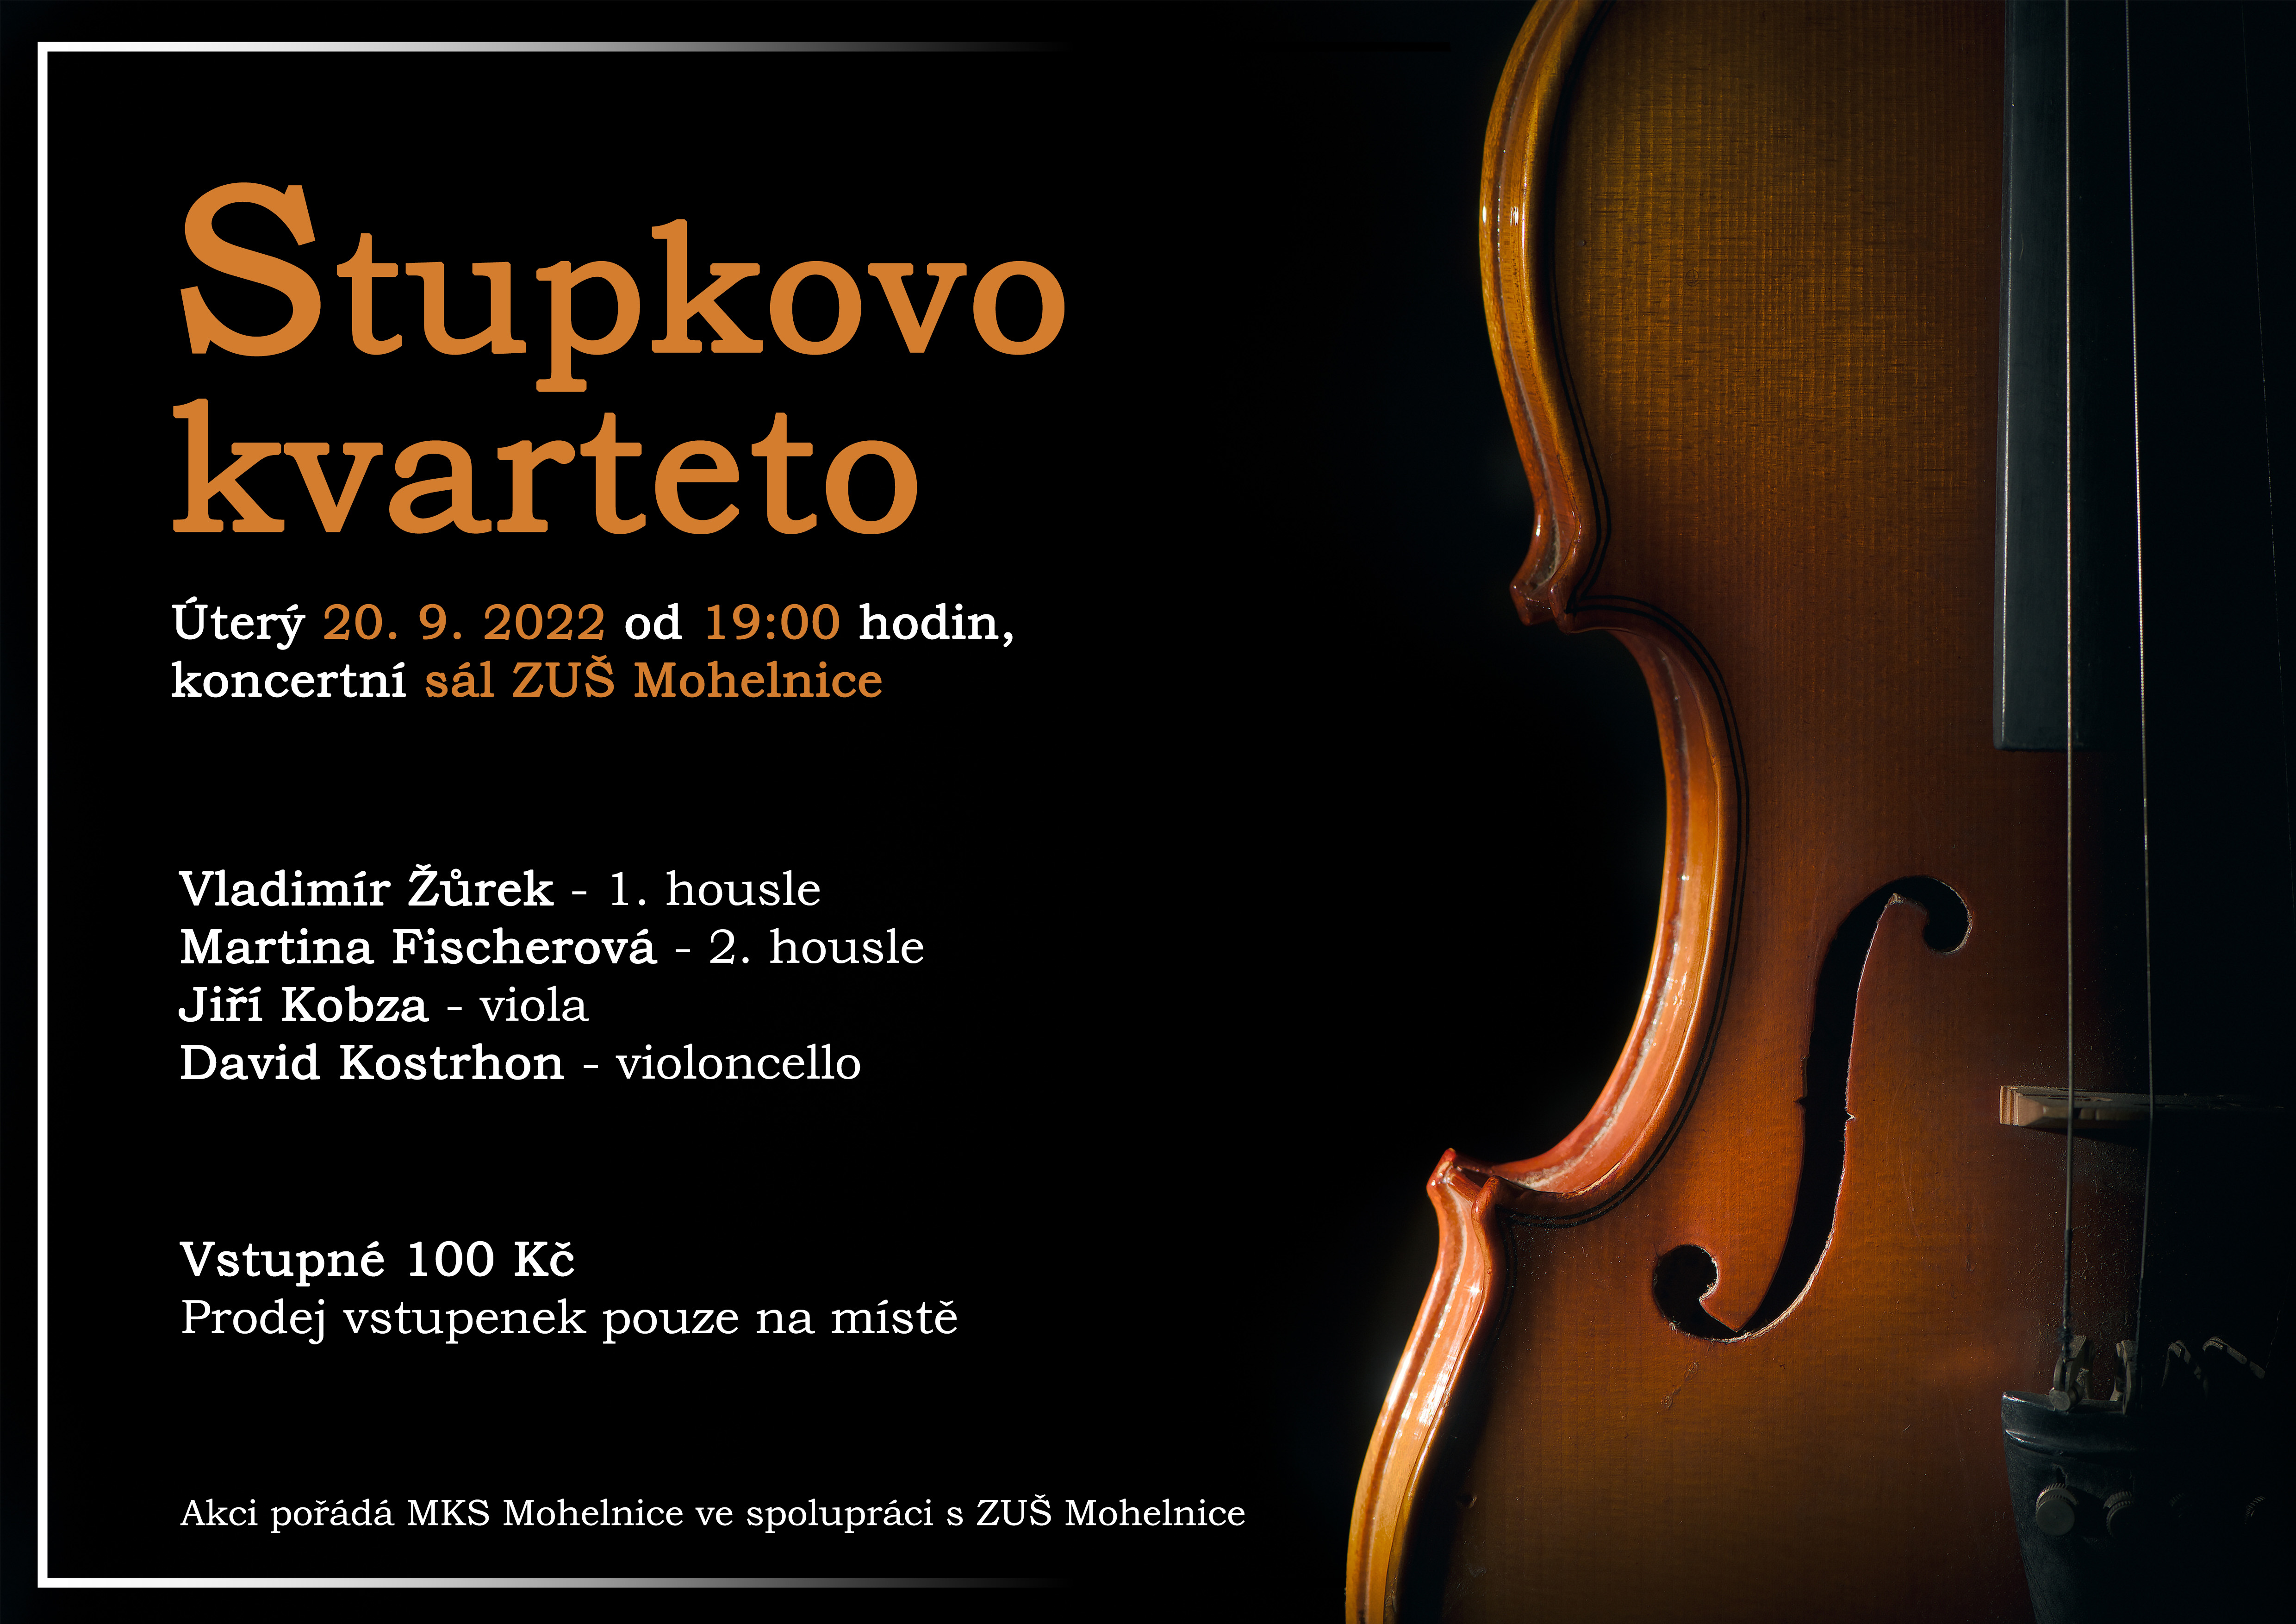 https://www.mks-mohelnice.cz/akce/8873-stupkovo-kvarteto-efq7